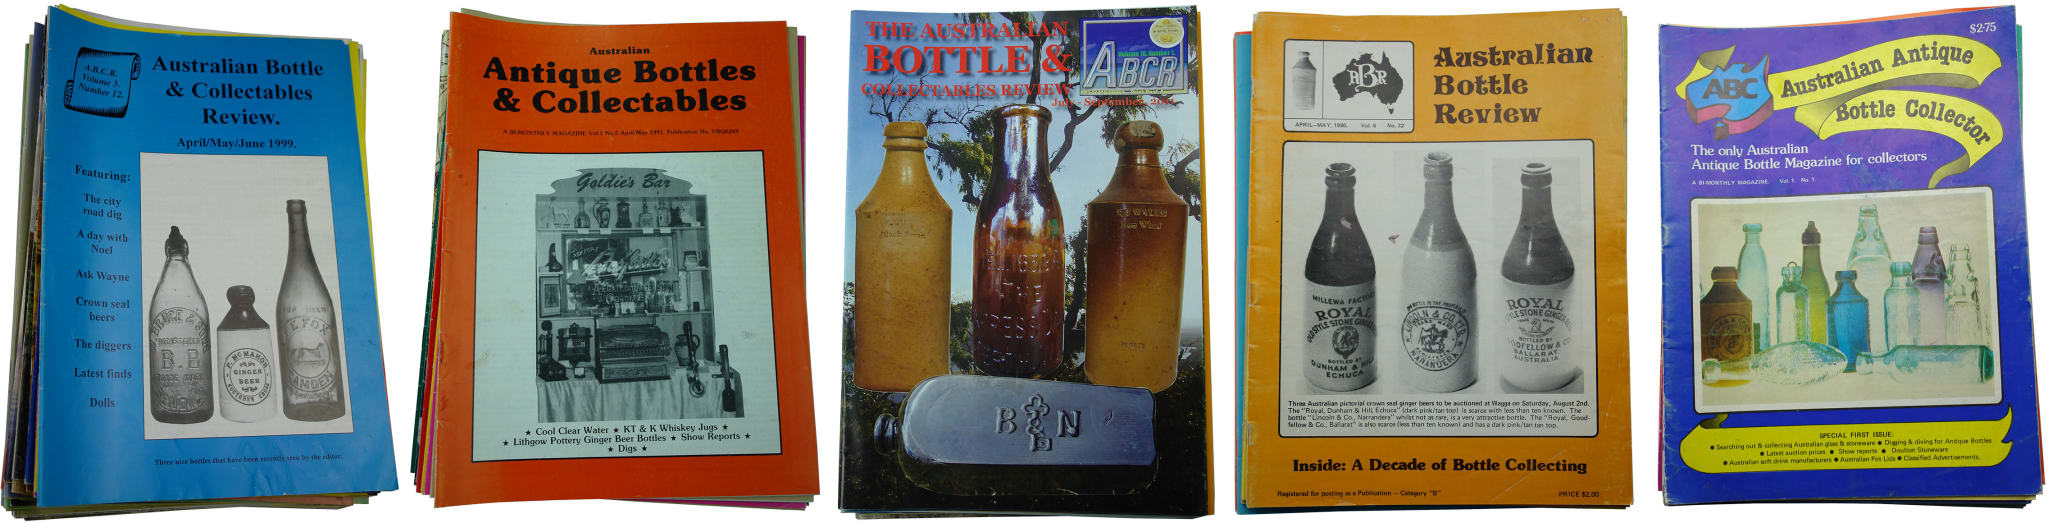 Australian Bottle Collecting Books